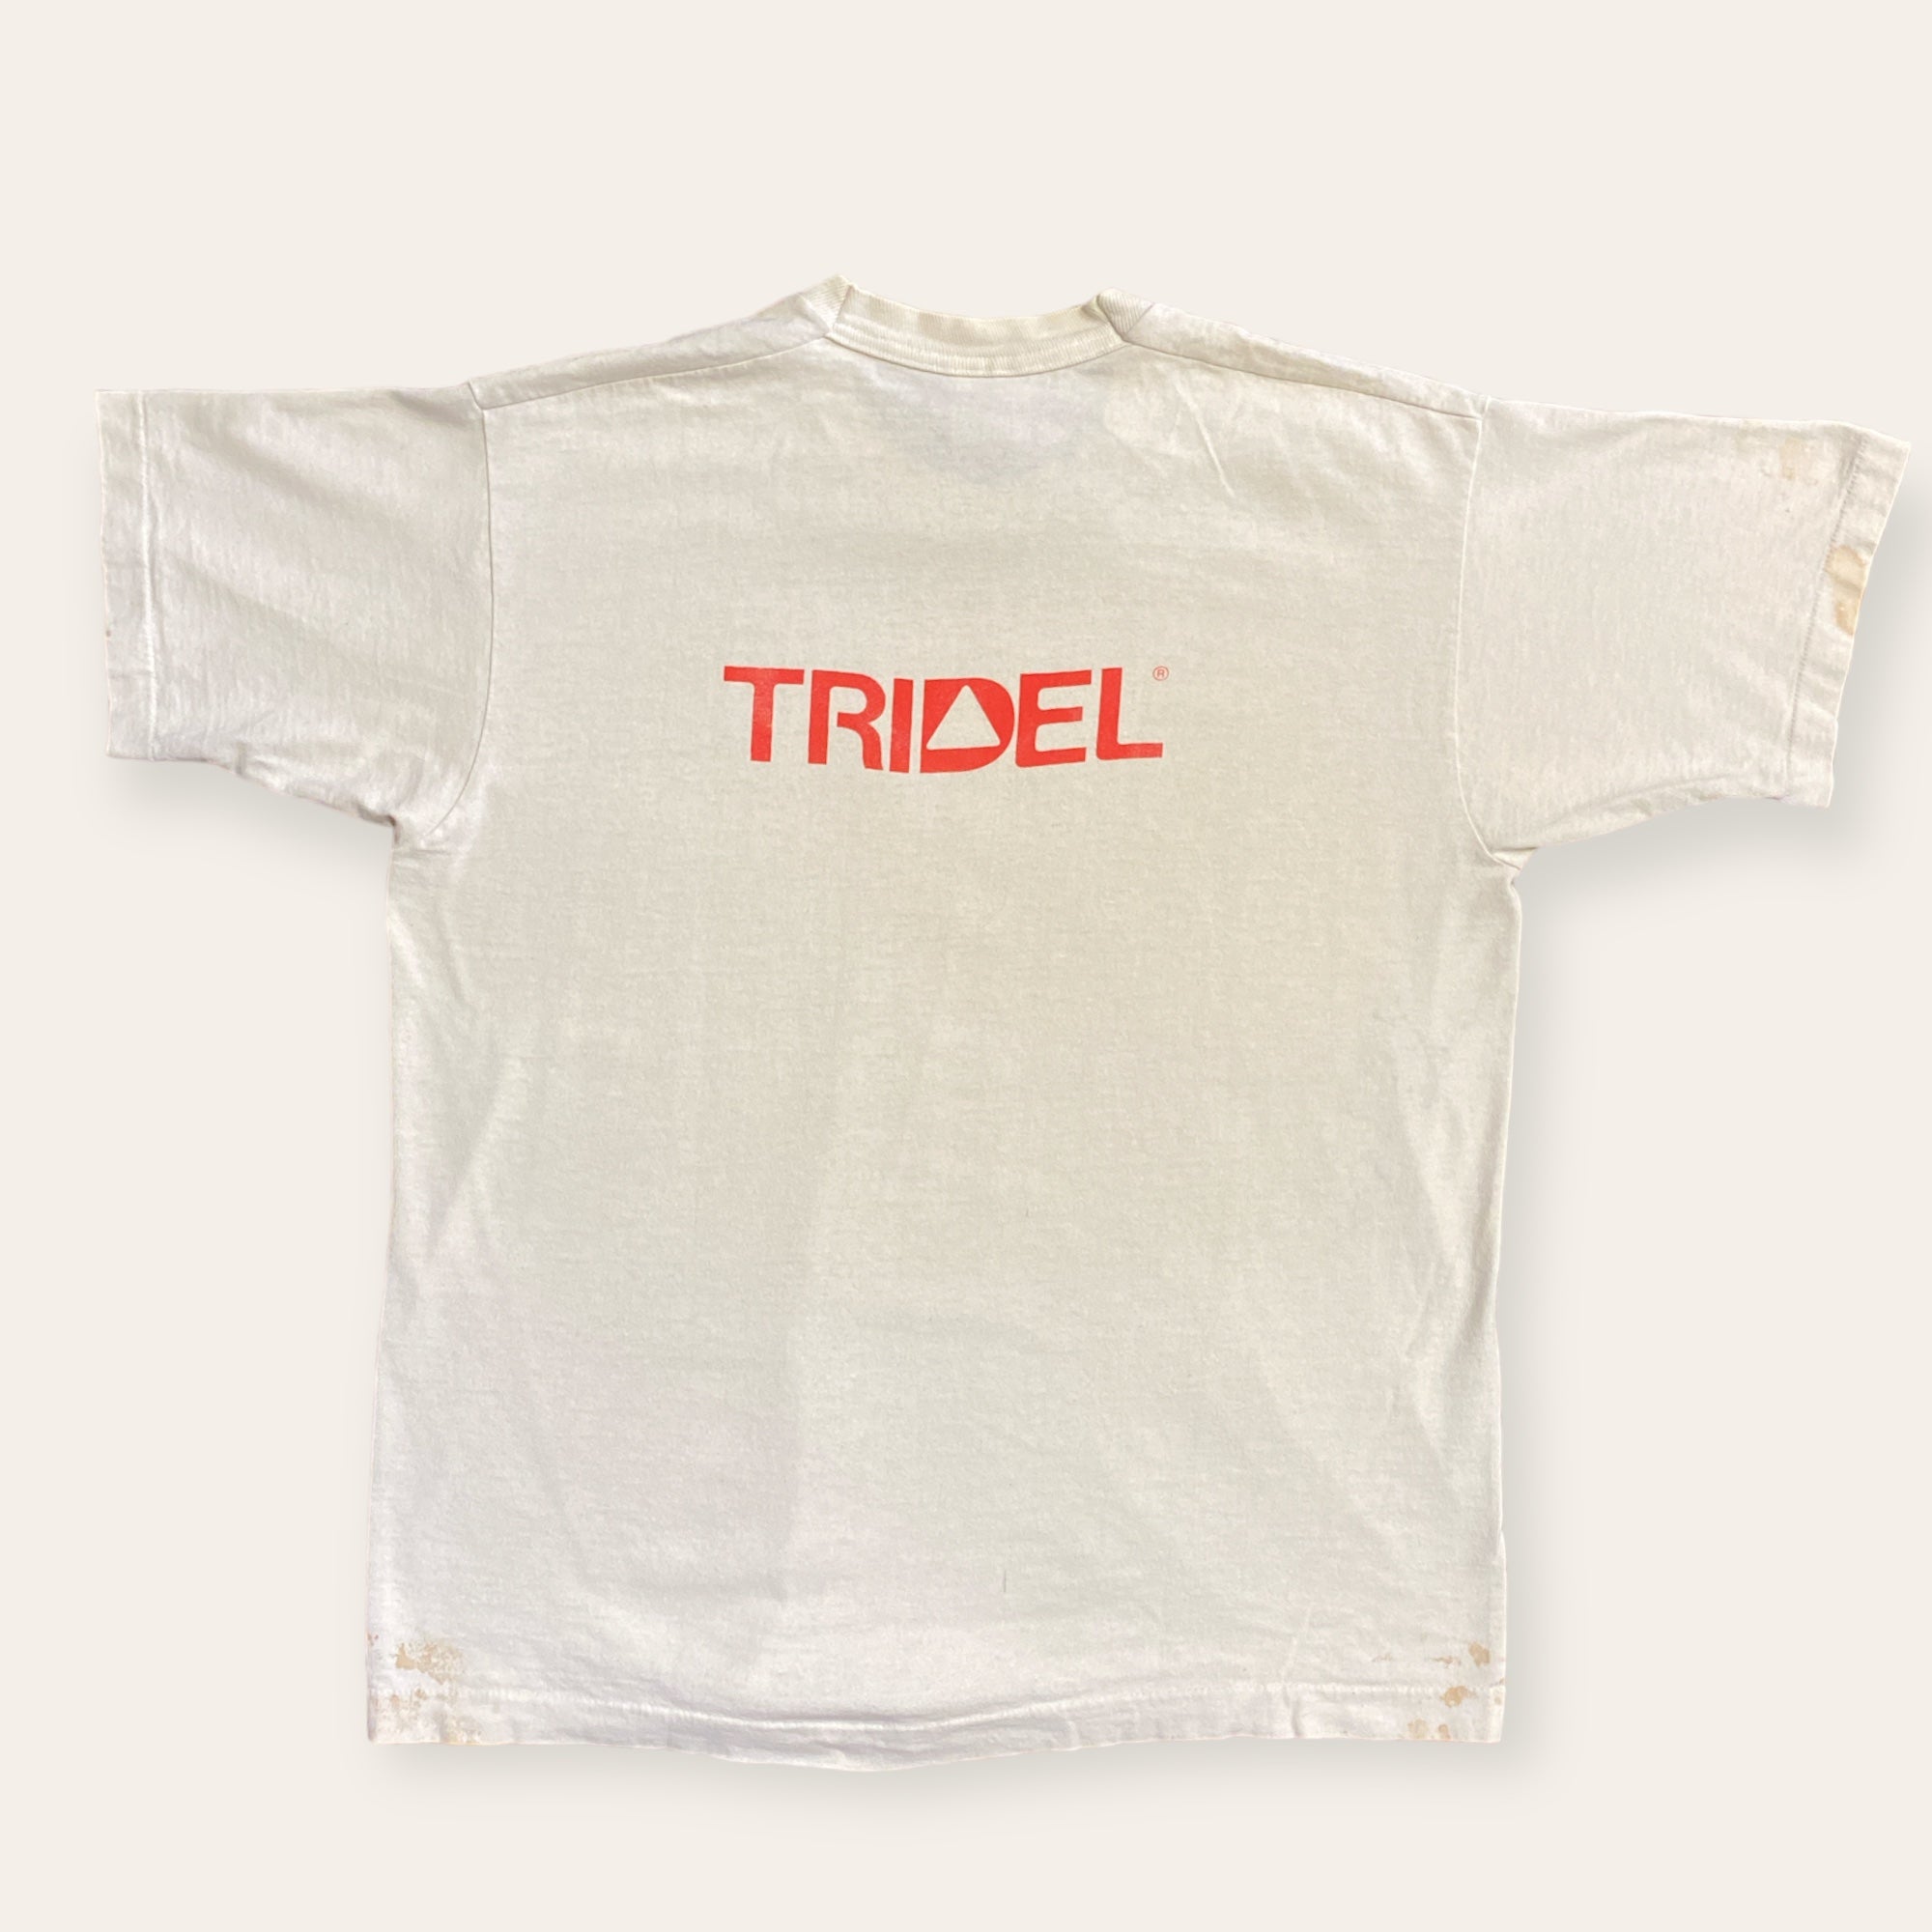 1997 Tridel Walkathon Tee Size L